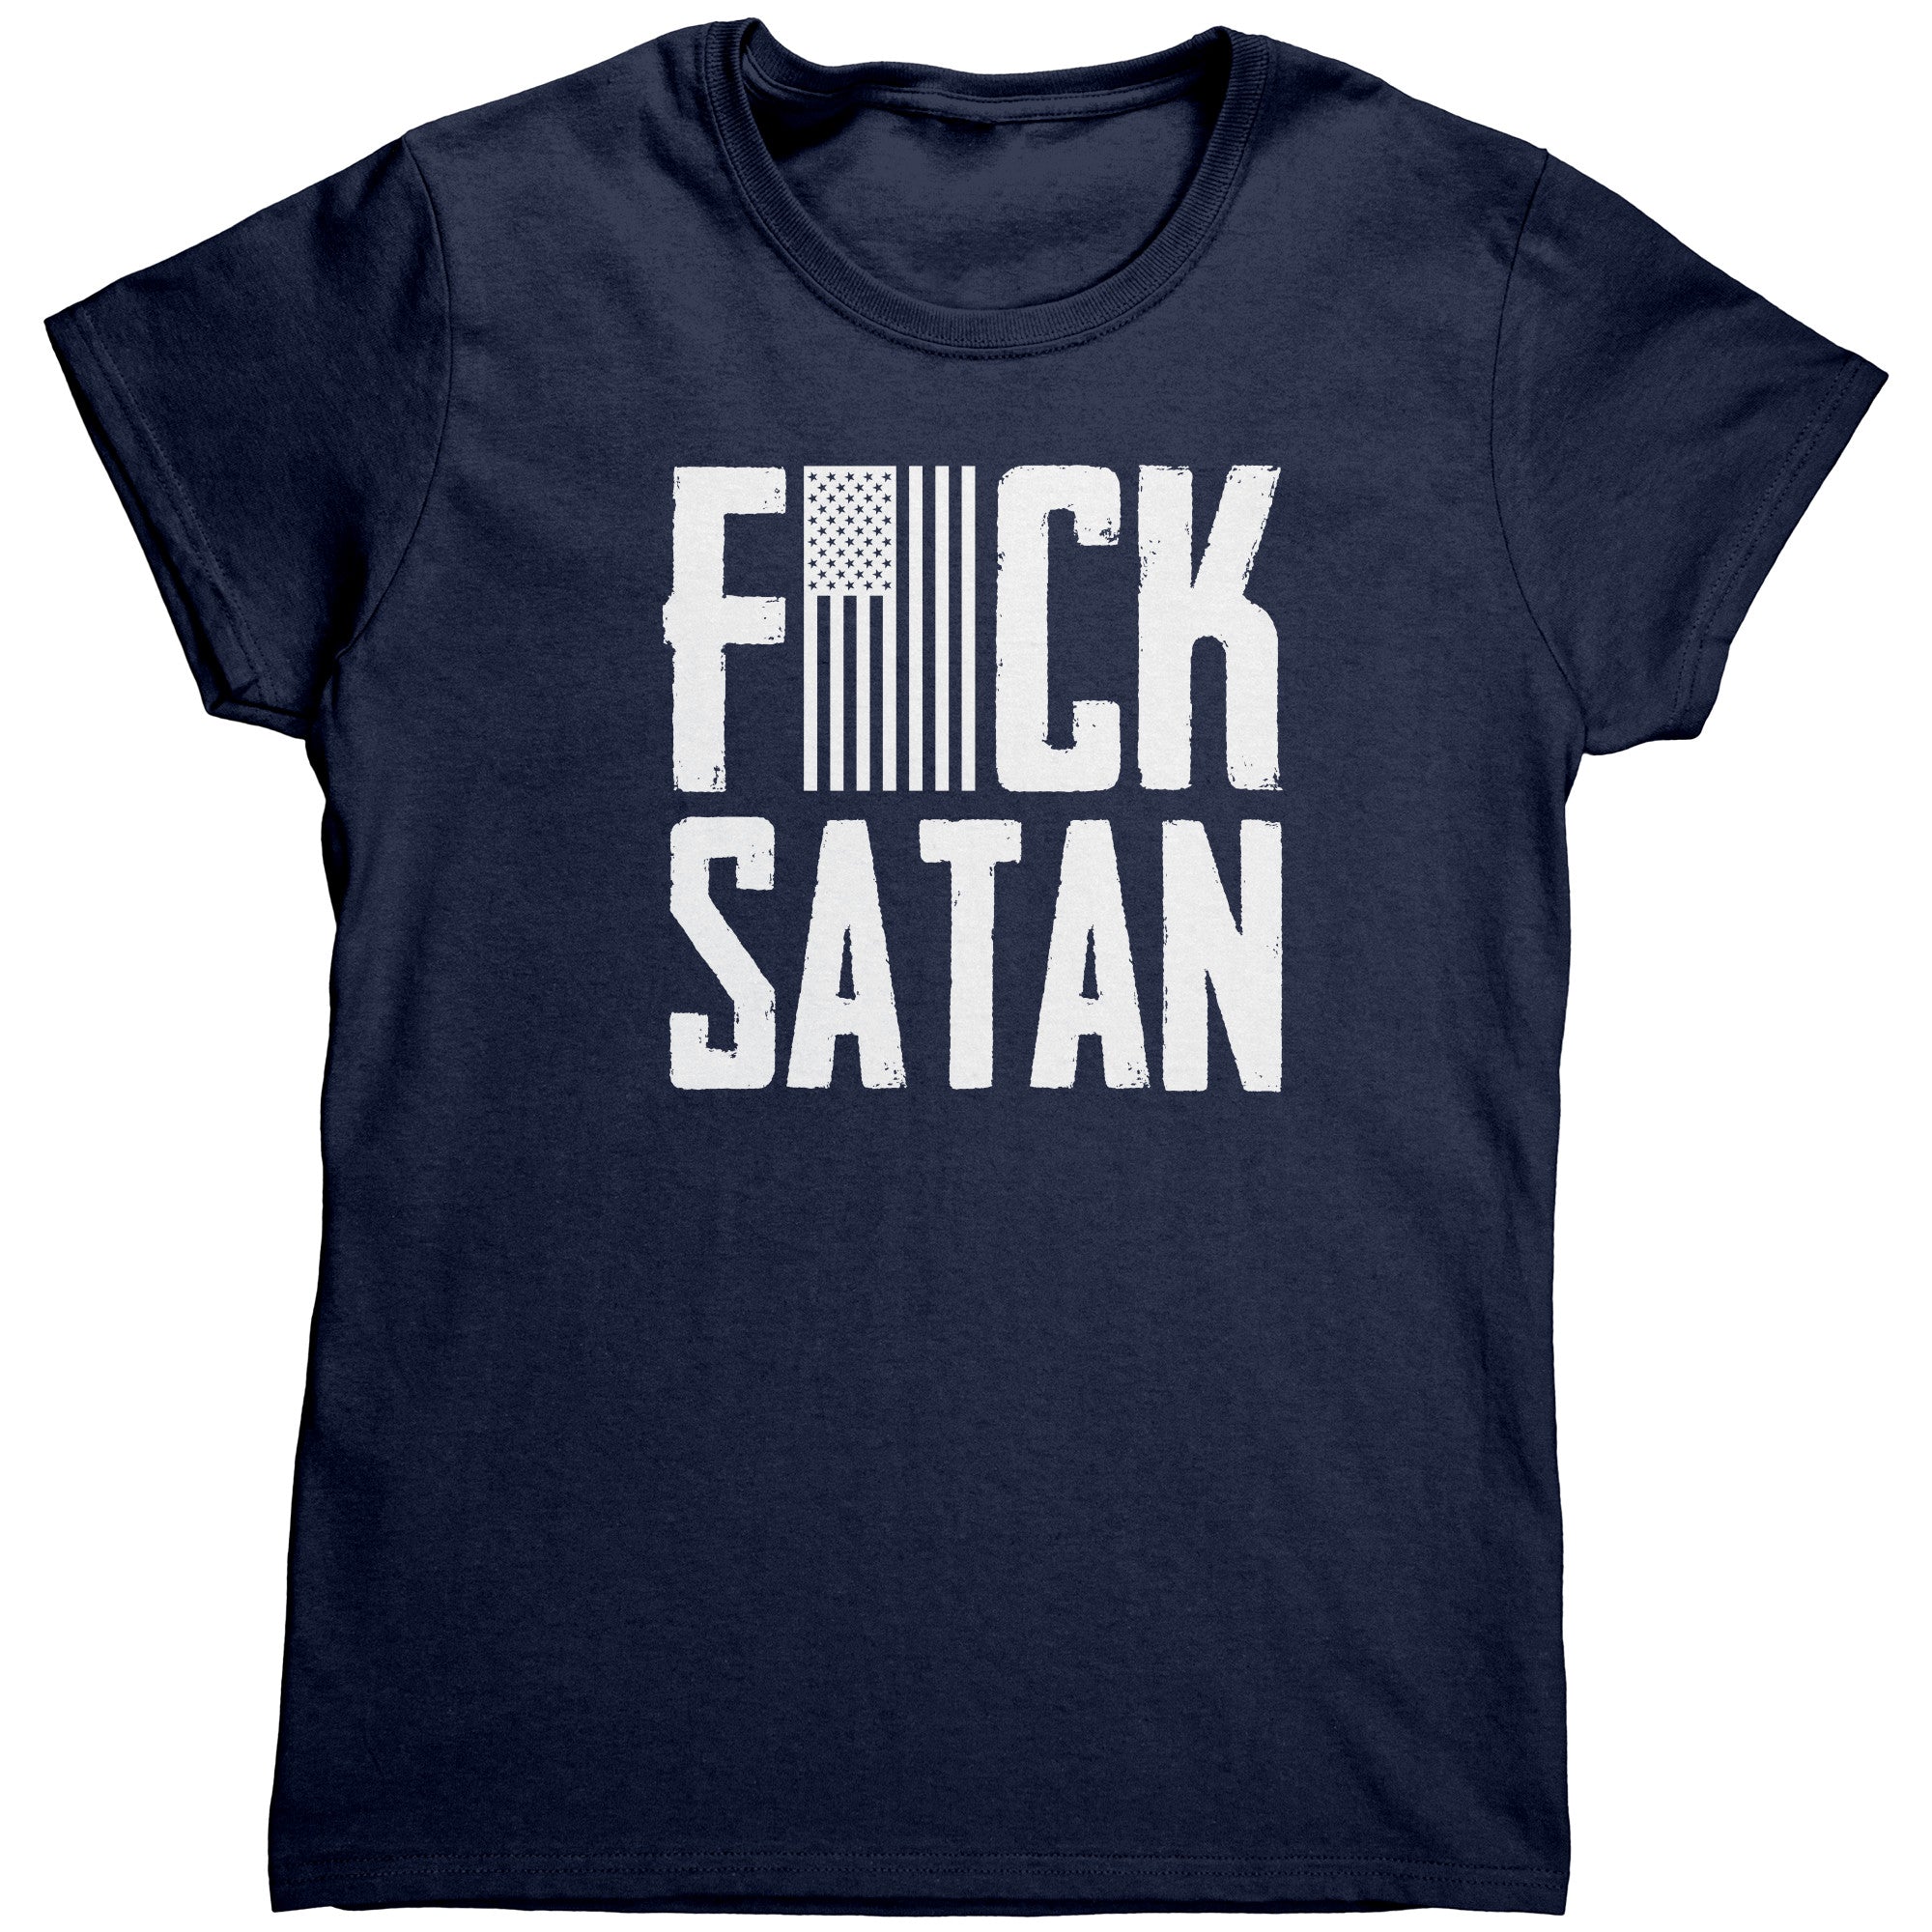 Fck Satan (Ladies) -Apparel | Drunk America 